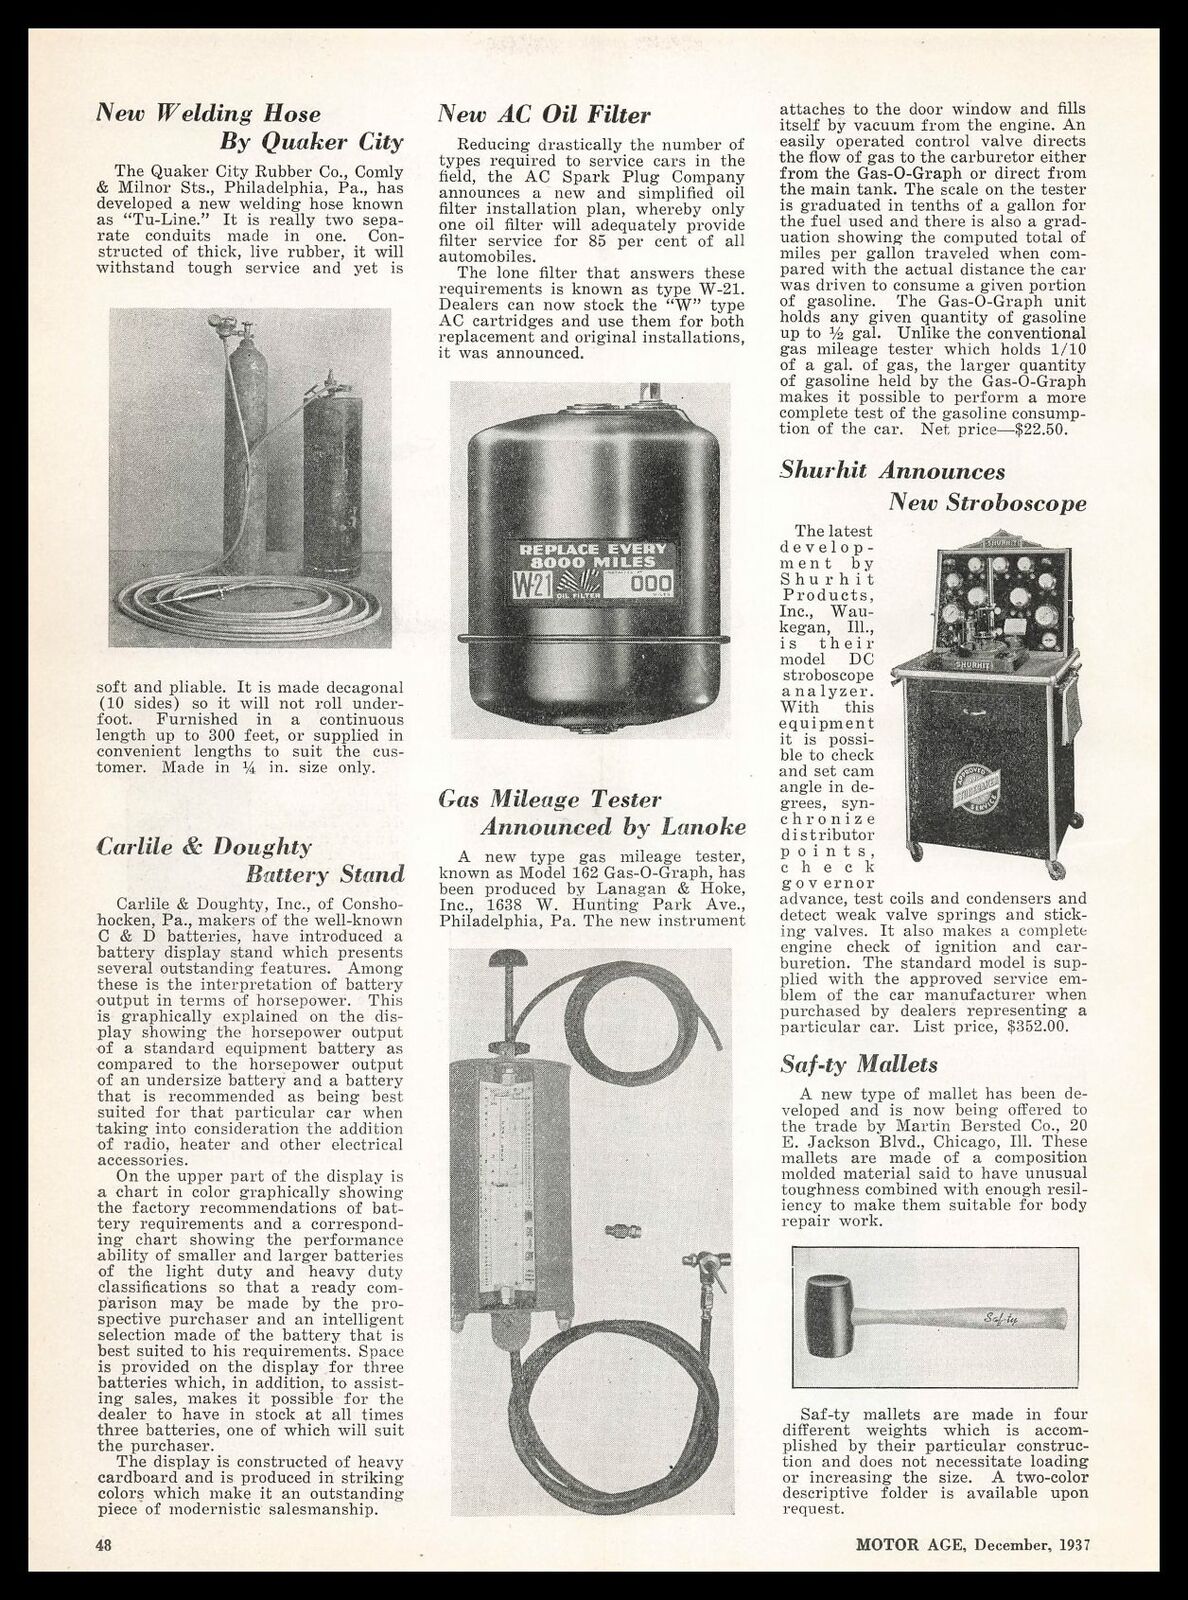 1937 Quaker City Rubber Co. Philadelphia "tu-line" Welding Hose Vintage Print Ad